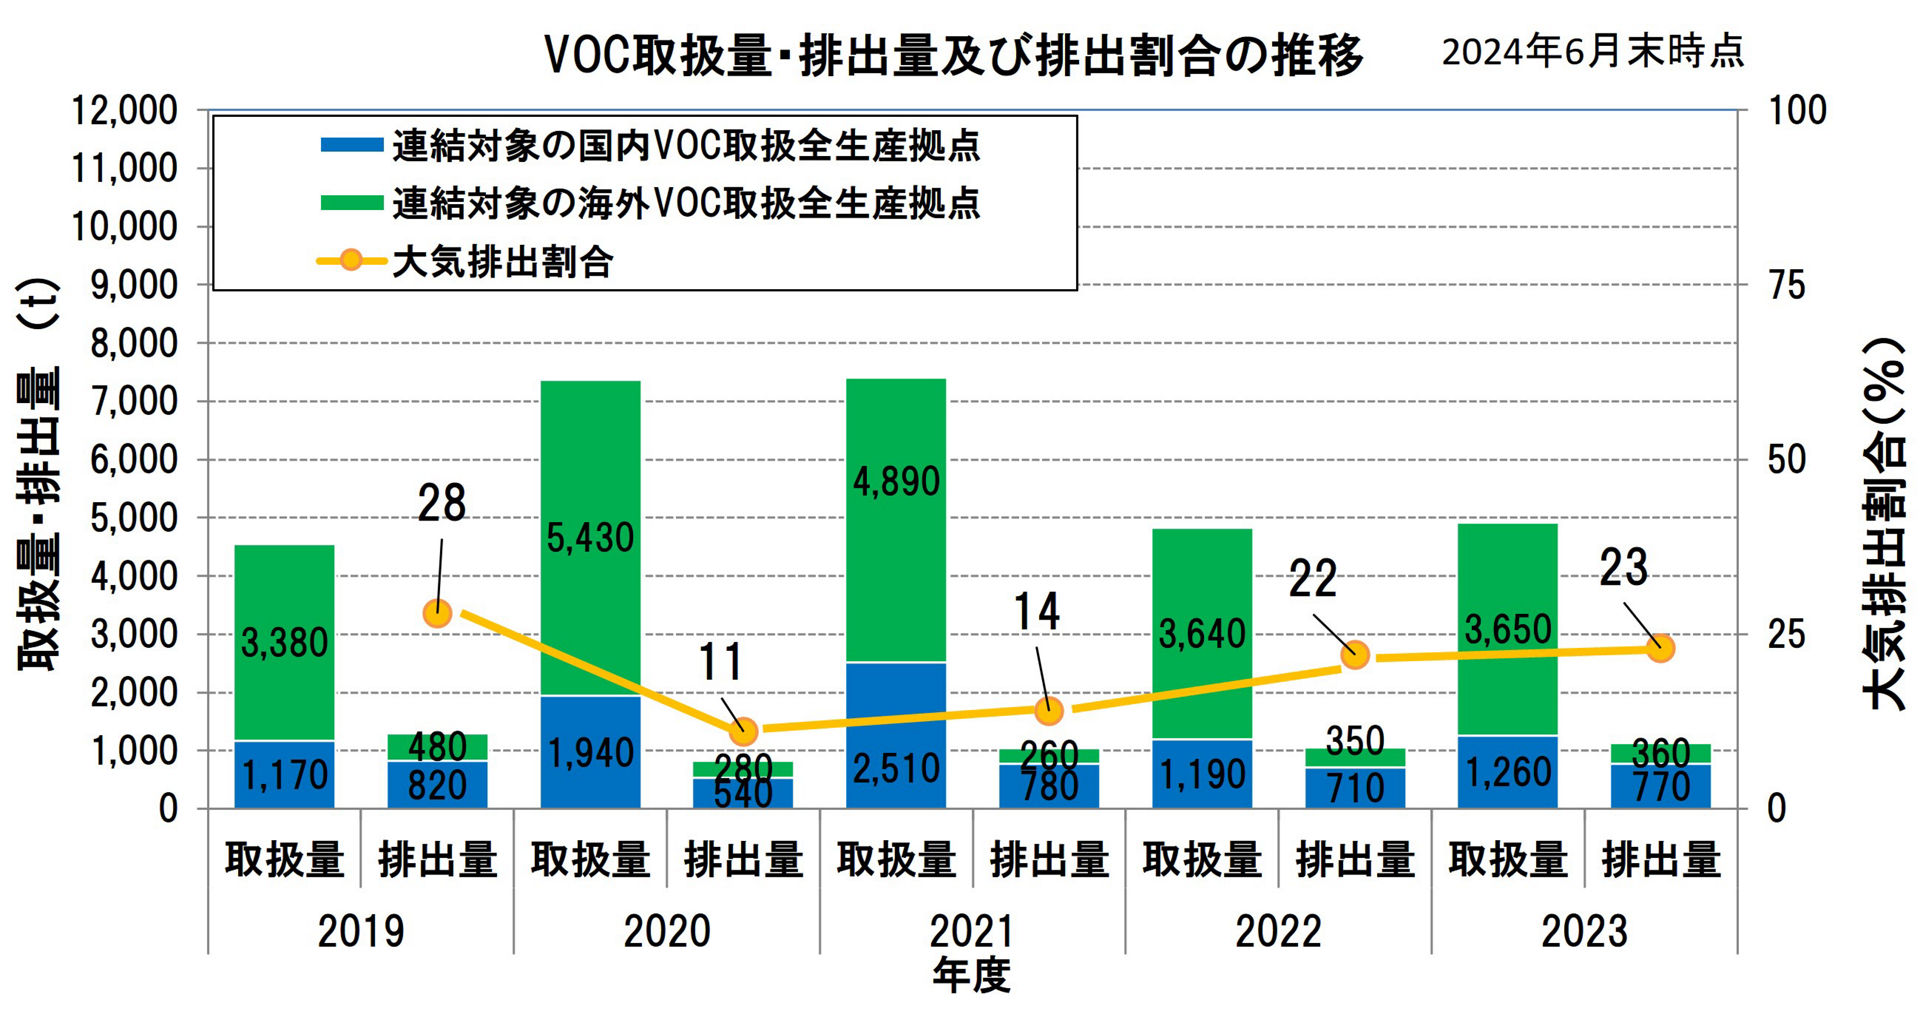 VOC取扱量・排出量及び排出割合の推移